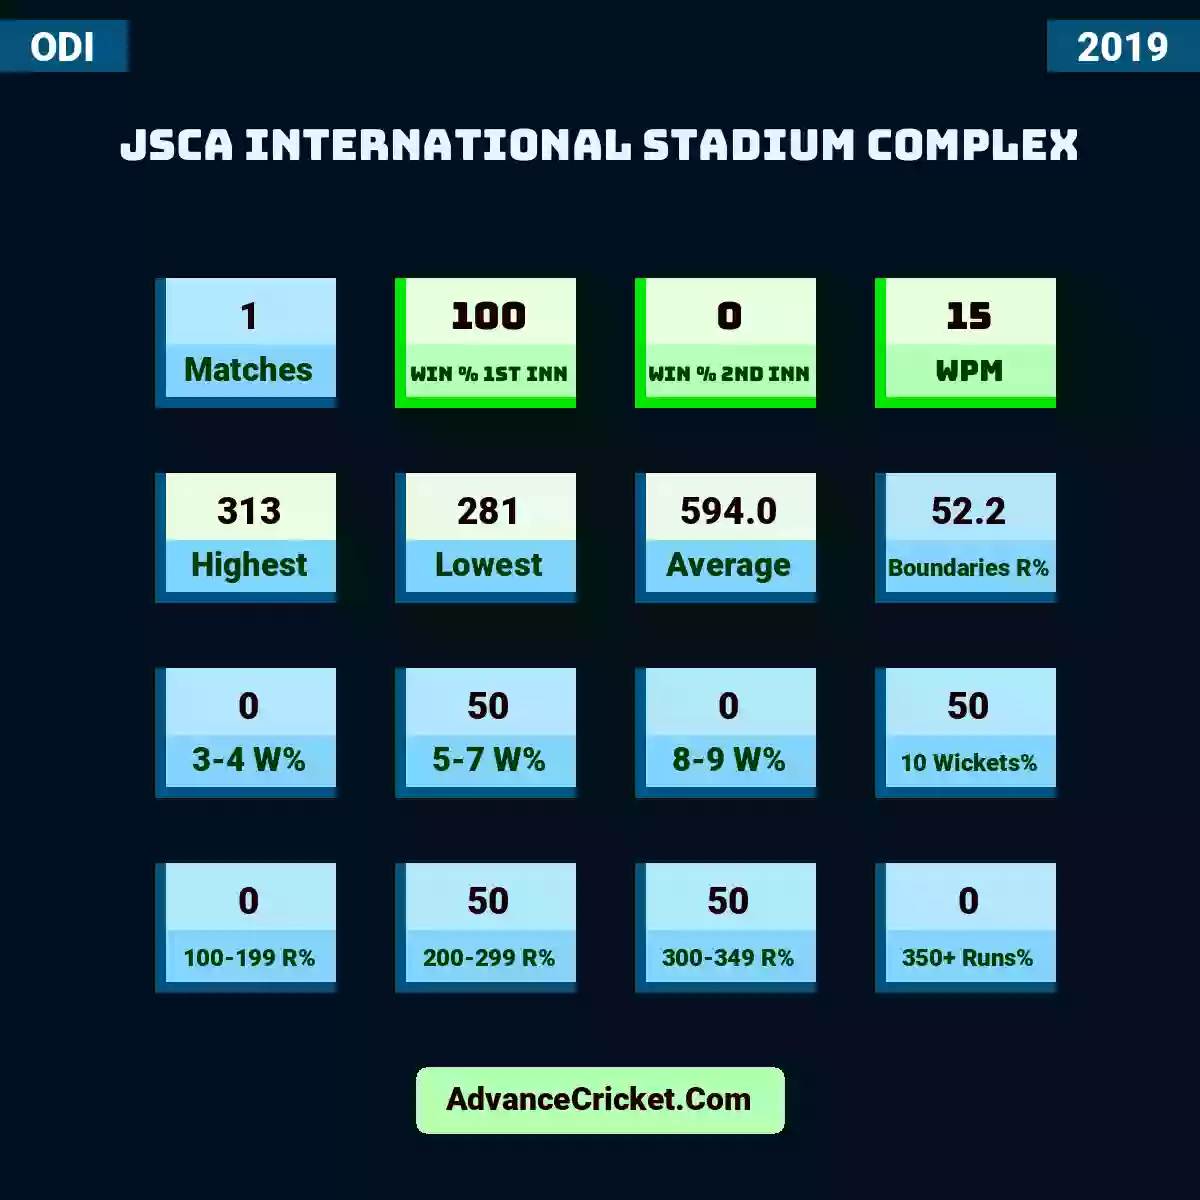 Image showing JSCA International Stadium Complex with Matches: 1, Win % 1st Inn: 100, Win % 2nd Inn: 0, WPM: 15, Highest: 313, Lowest: 281, Average: 594.0, Boundaries R%: 52.2, 3-4 W%: 0, 5-7 W%: 50, 8-9 W%: 0, 10 Wickets%: 50, 100-199 R%: 0, 200-299 R%: 50, 300-349 R%: 50, 350+ Runs%: 0.